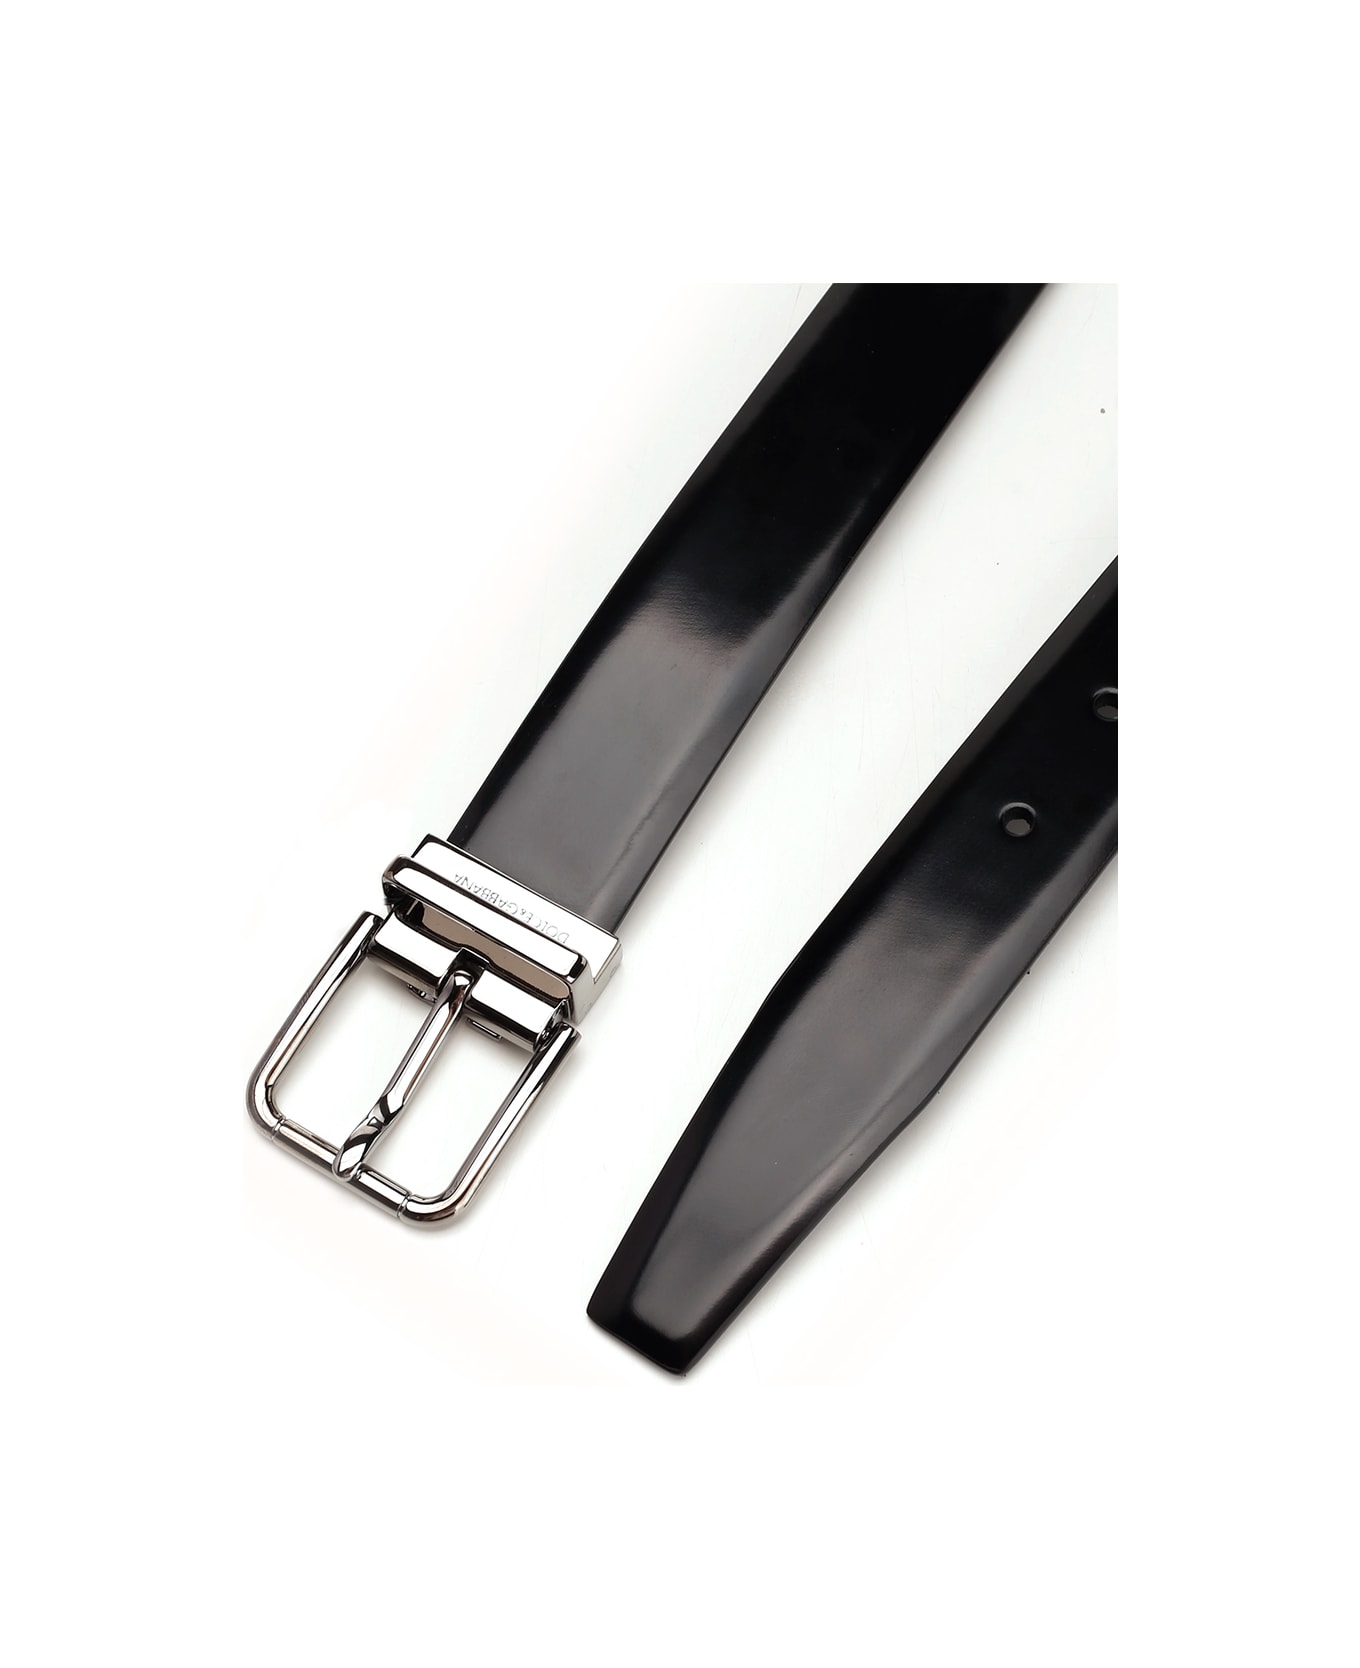 Dolce & Gabbana Glossy Black Belt - NERO